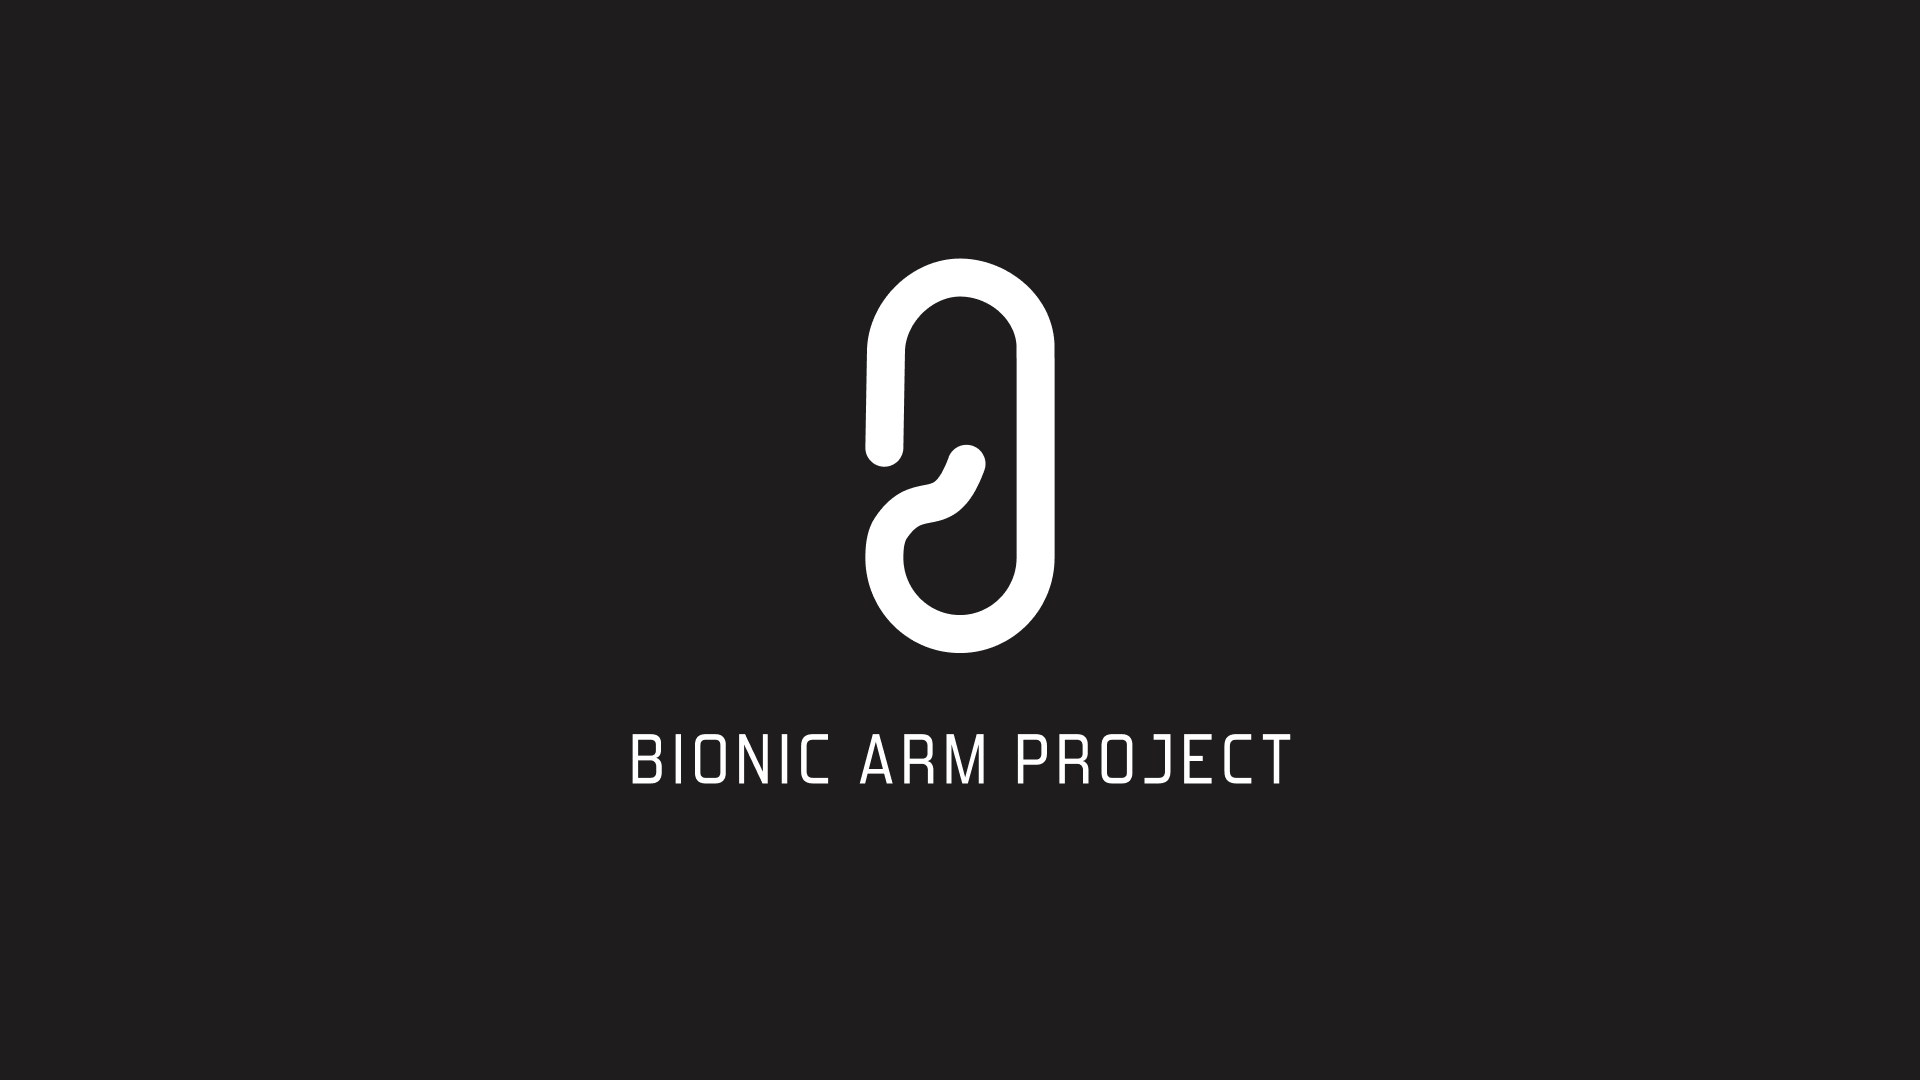 Bionic Arm Project